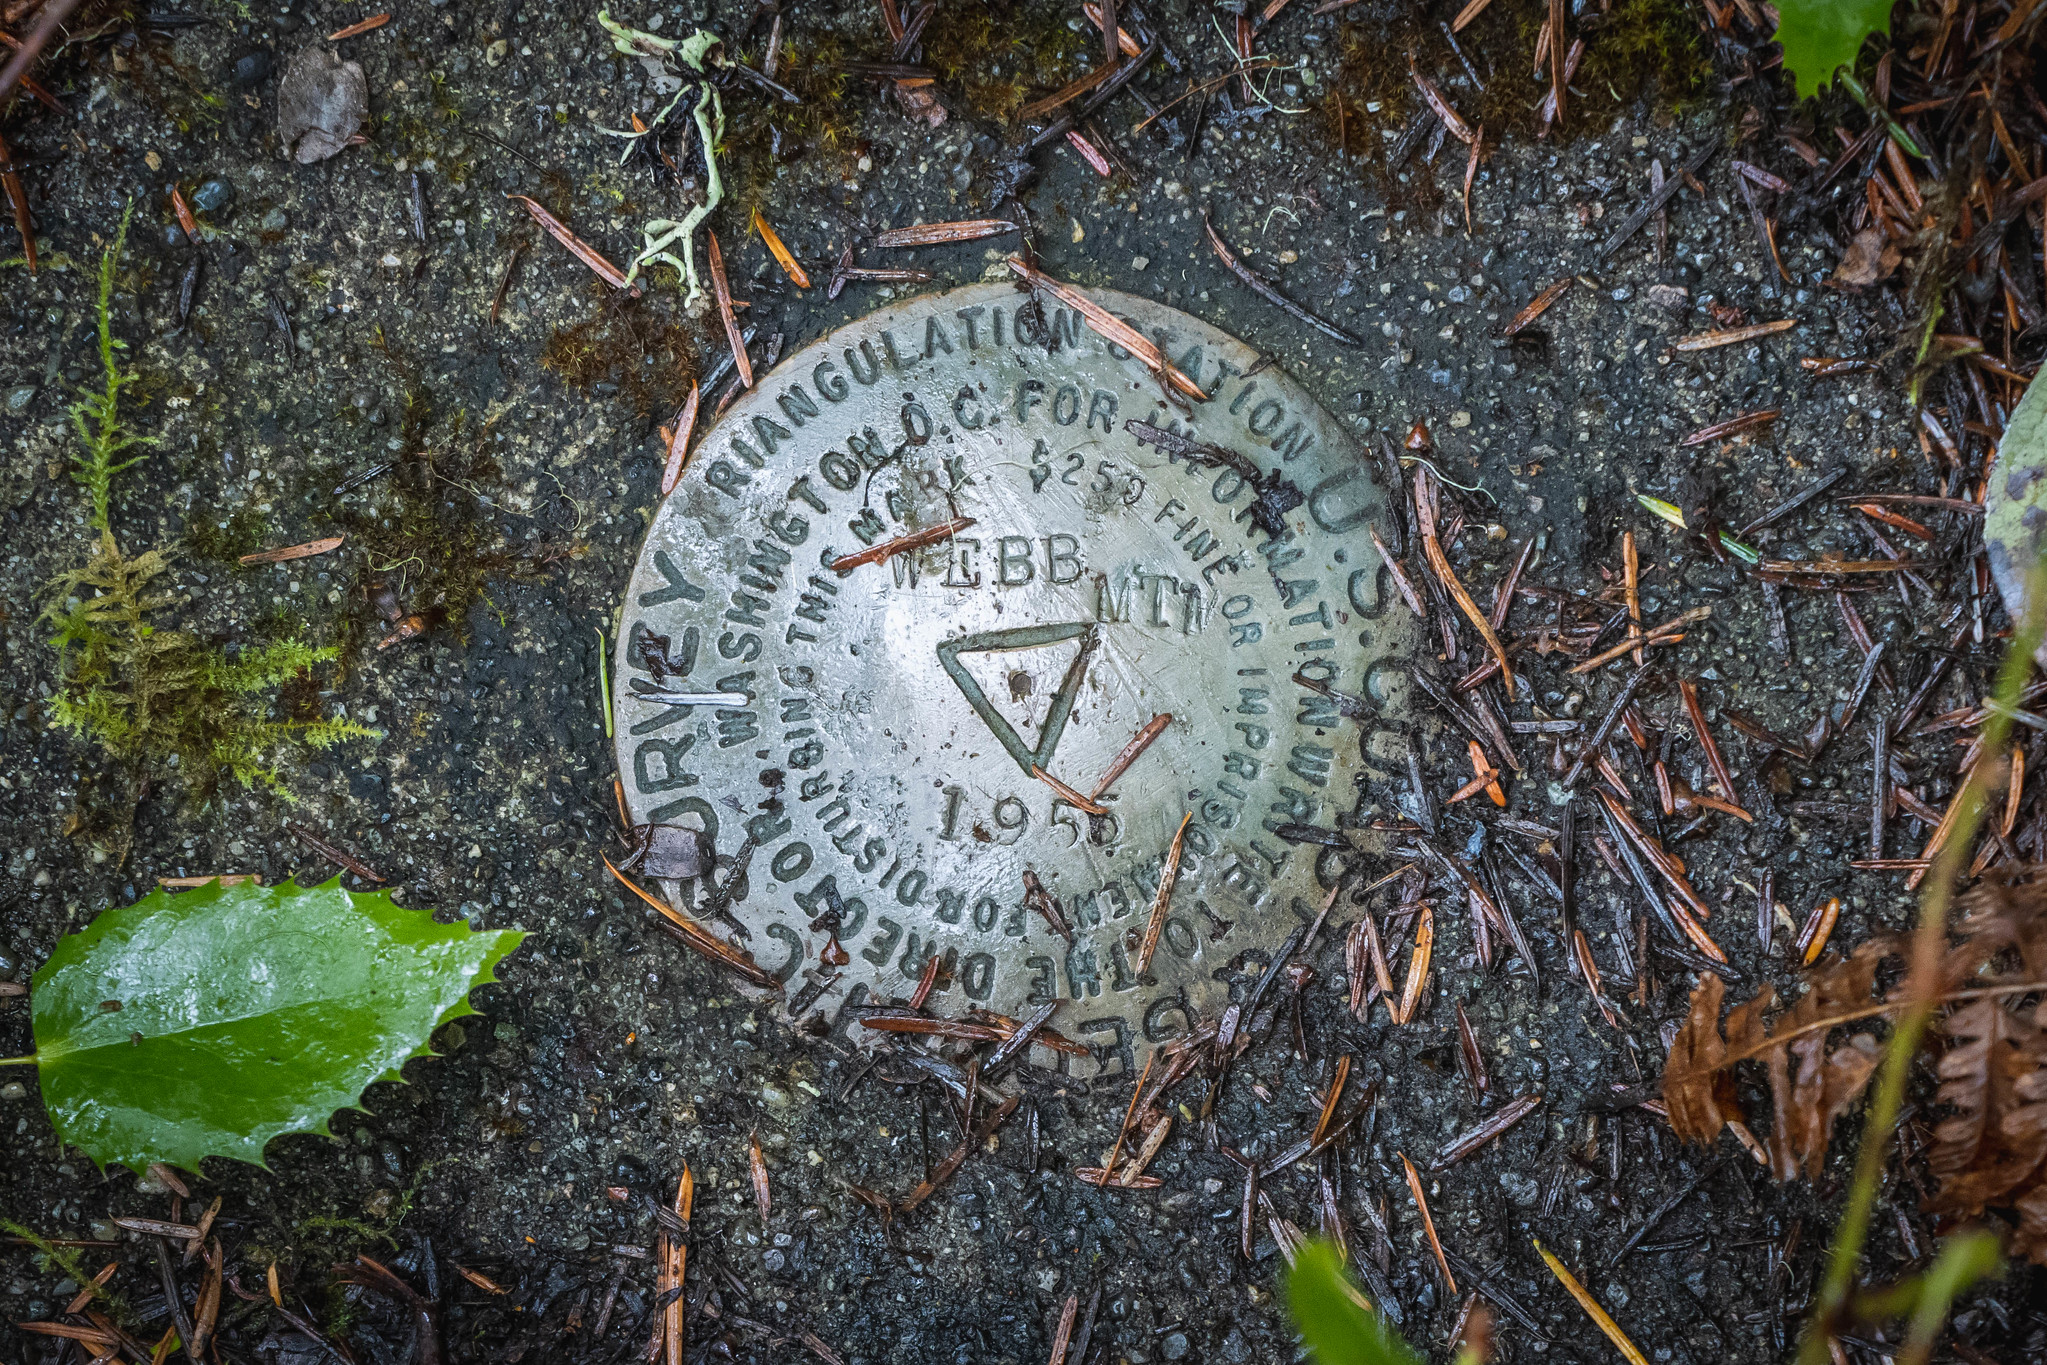 USGS marker